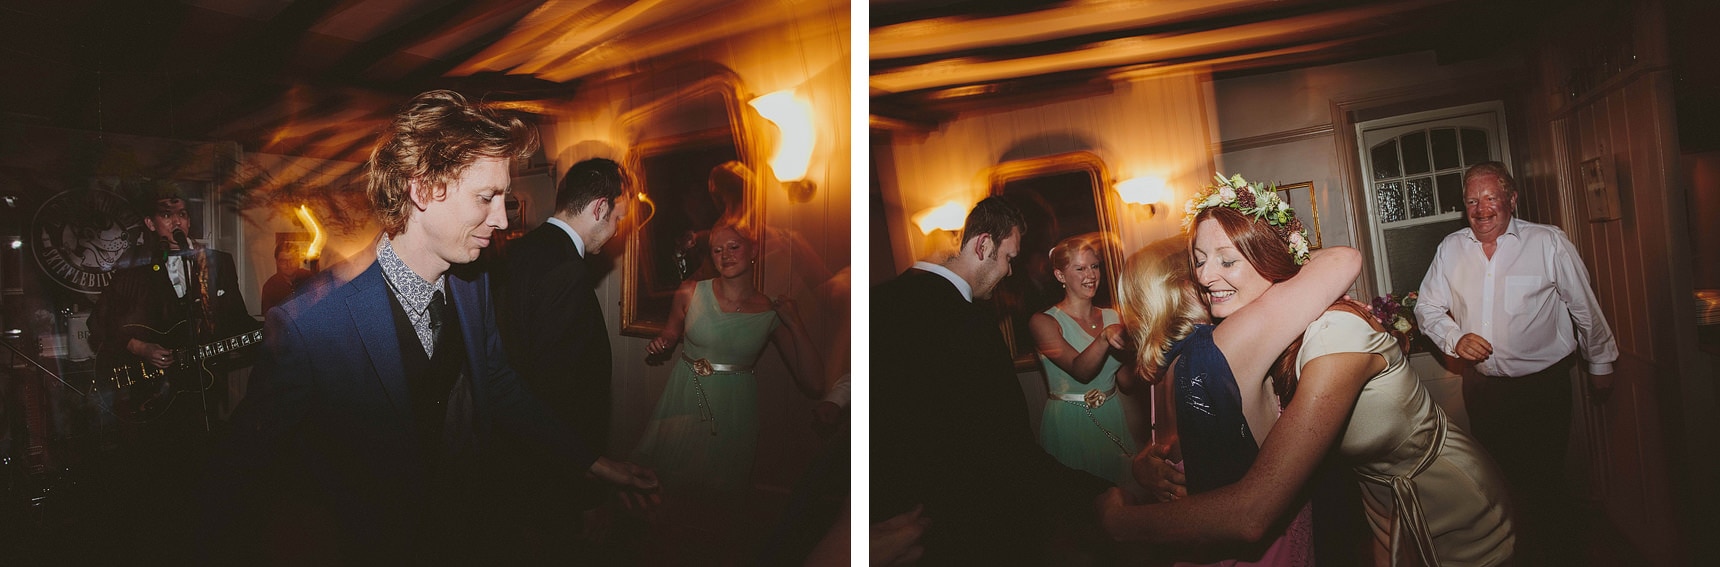 wedding dancing photos